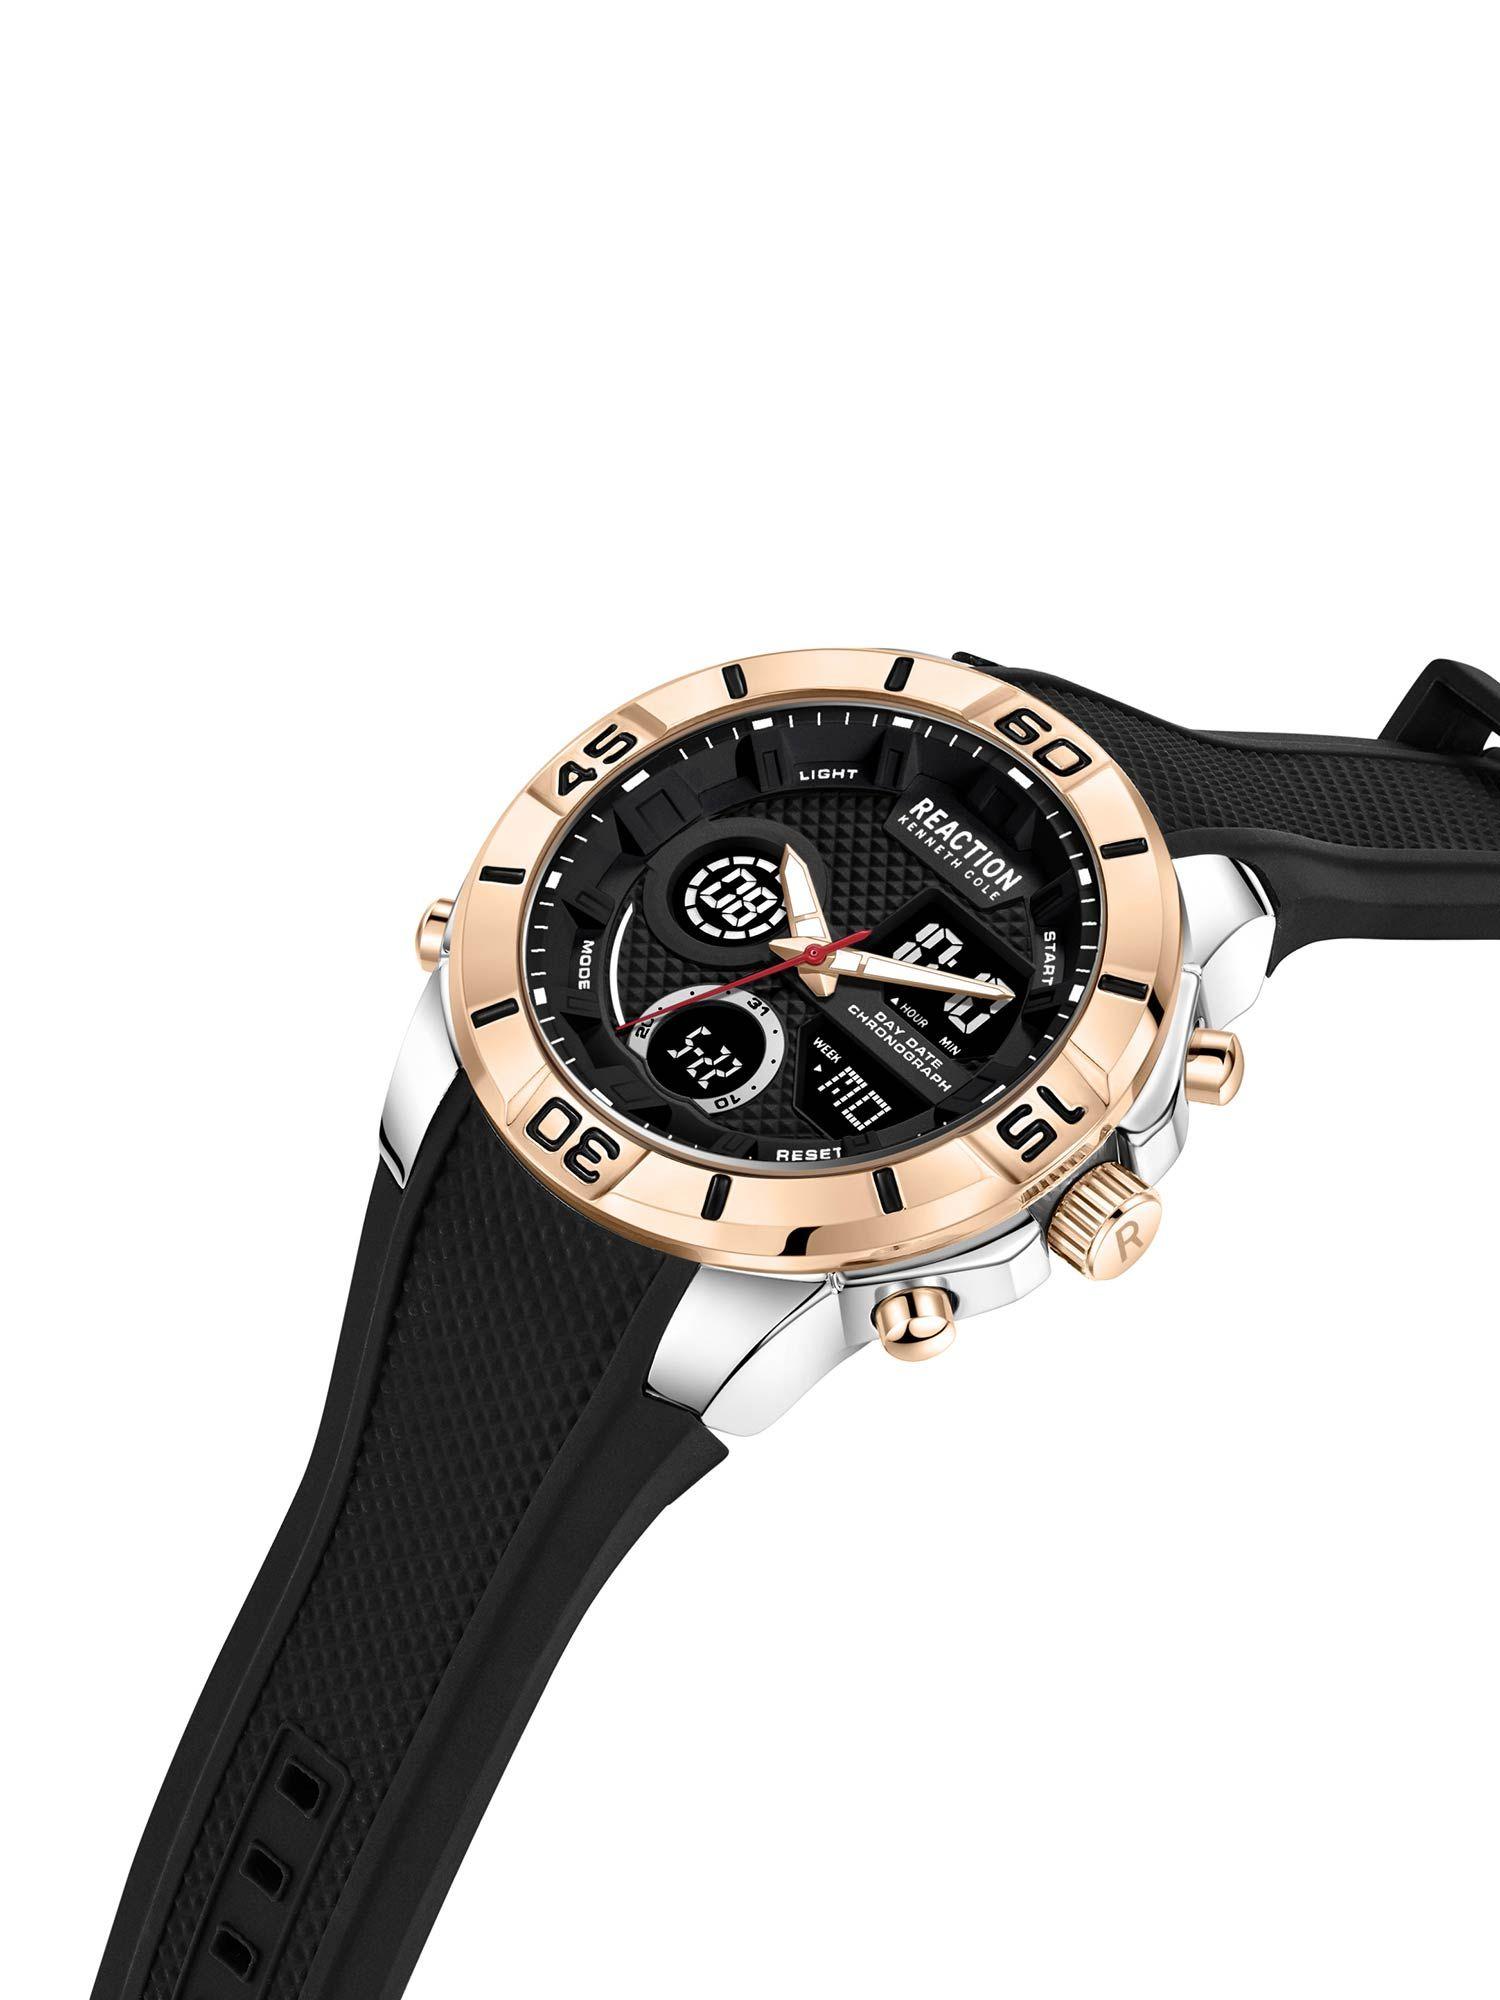 ana-digit black silicone strap sports wear watch for mens - krwgp2192105